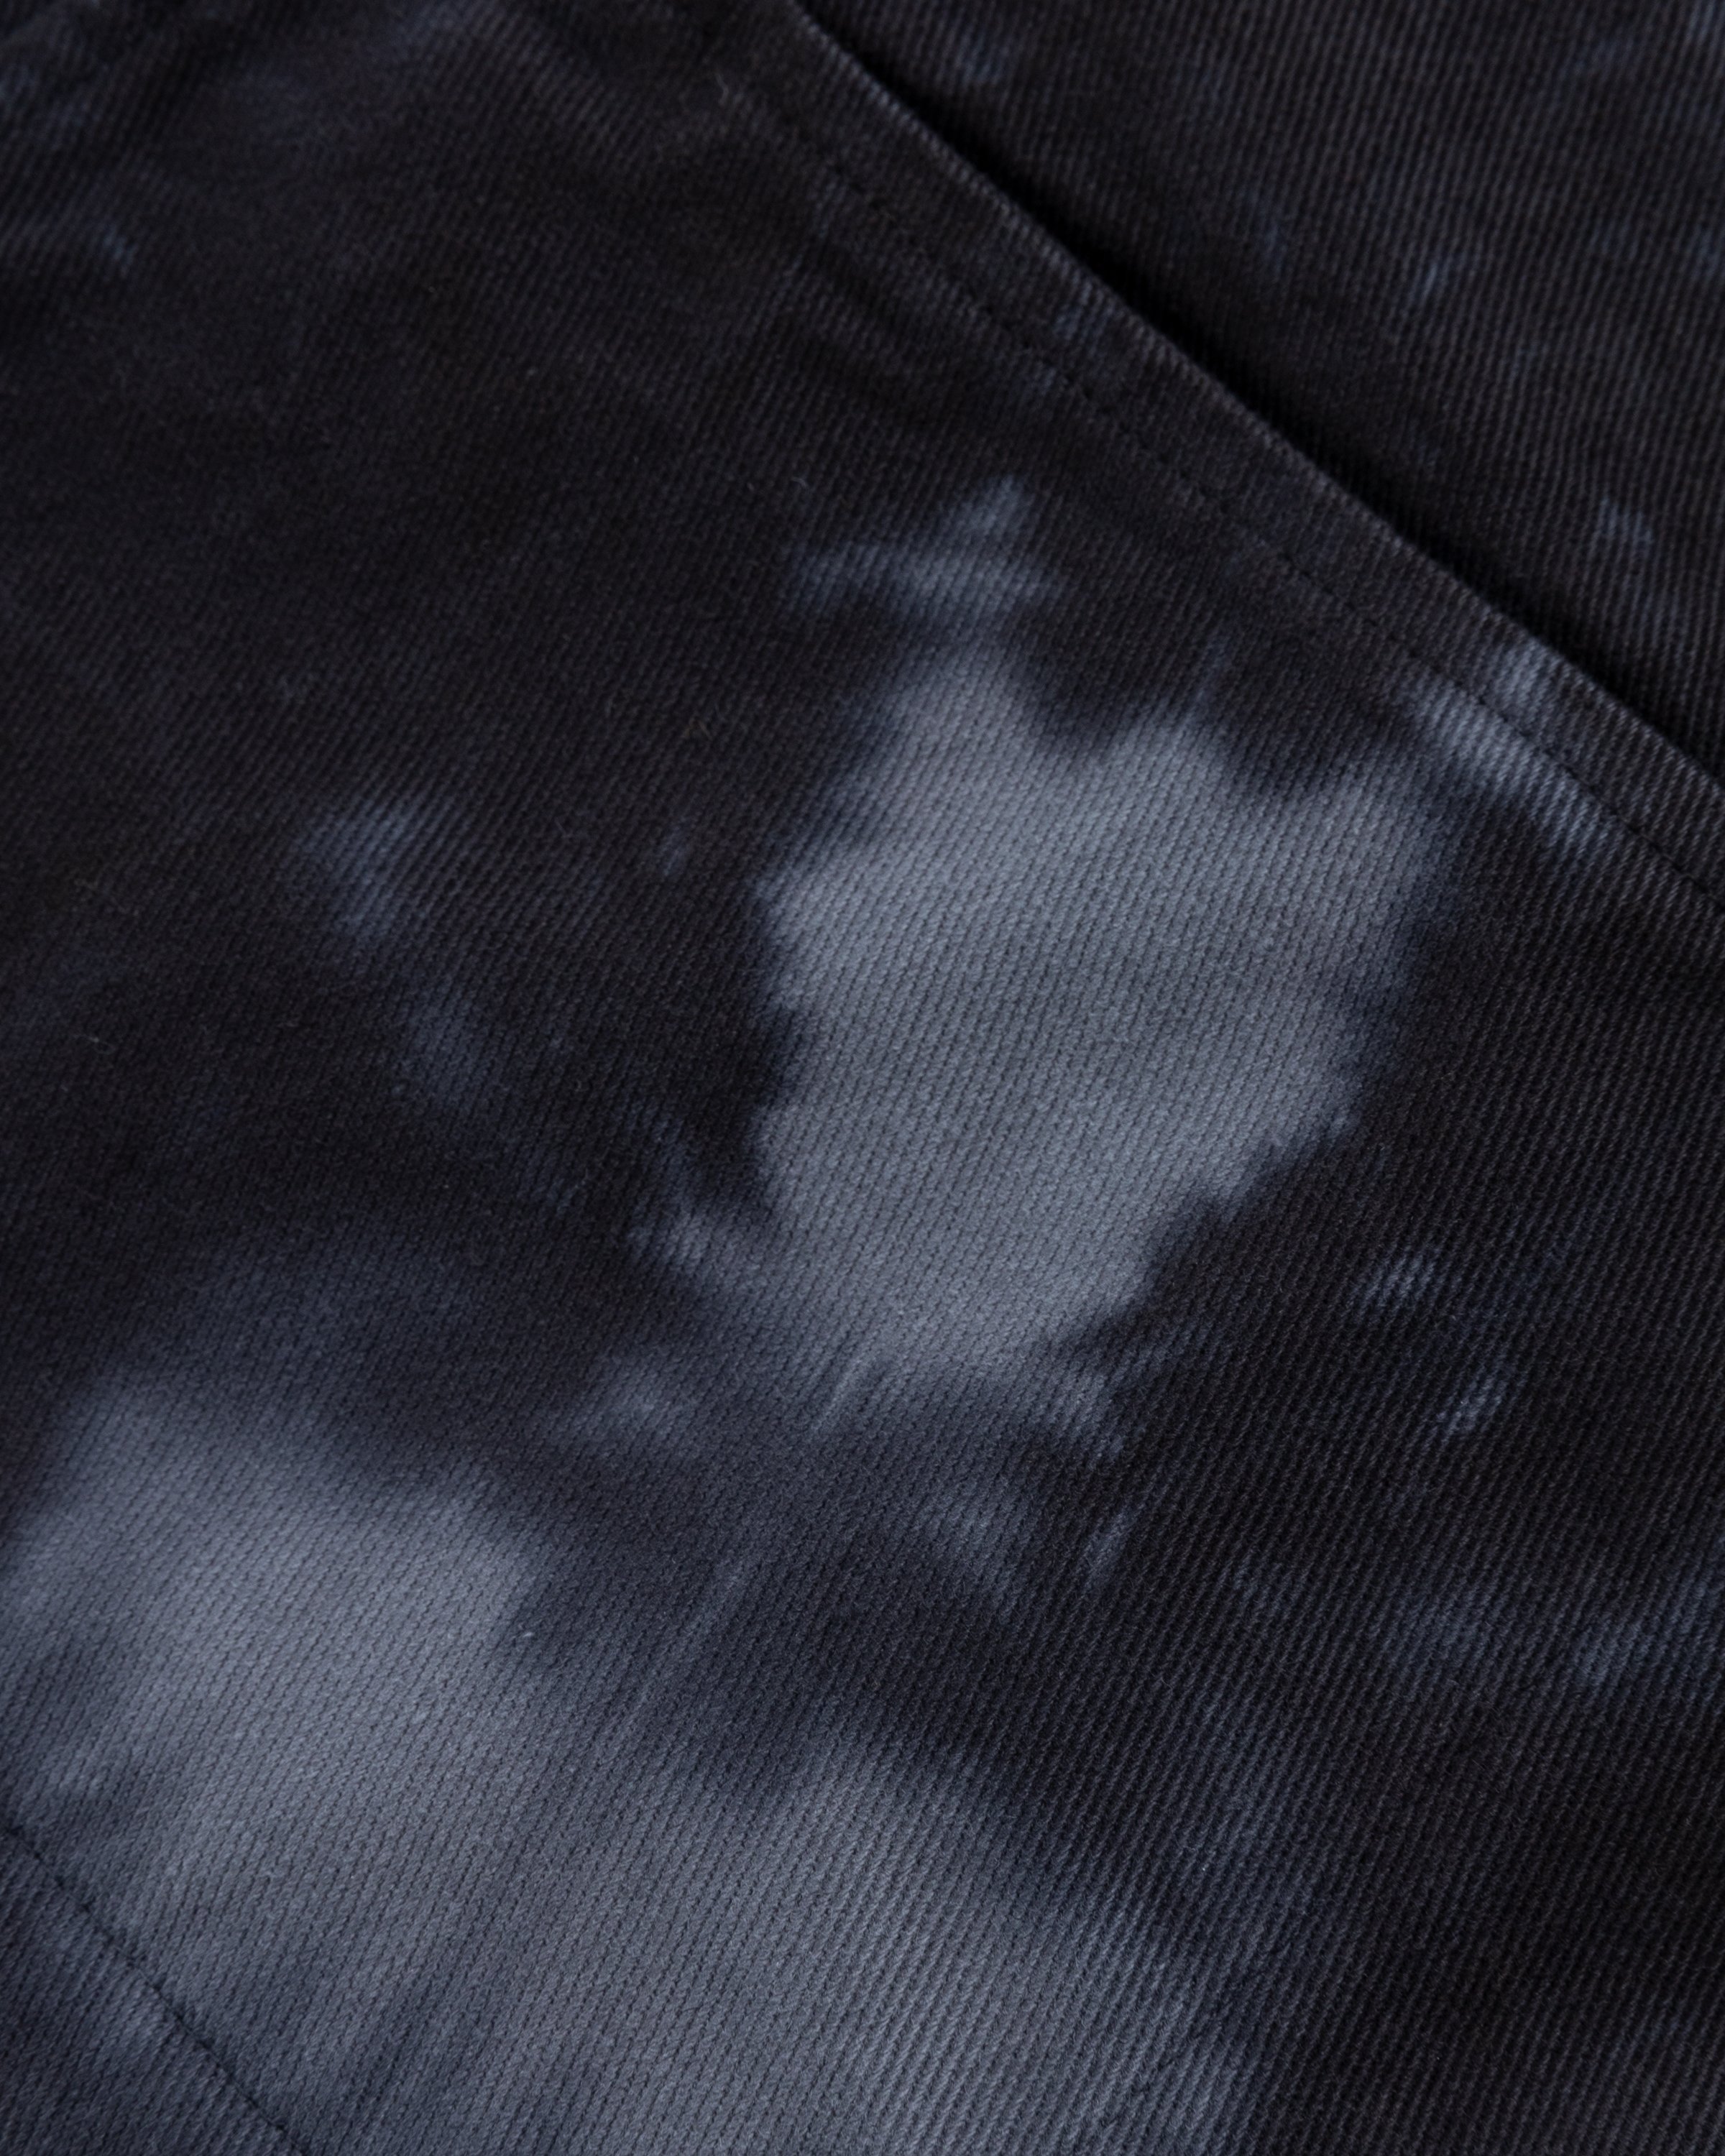 AFFXWRKS - Crease-Dyed Corso Pant Black - Clothing - Black - Image 7